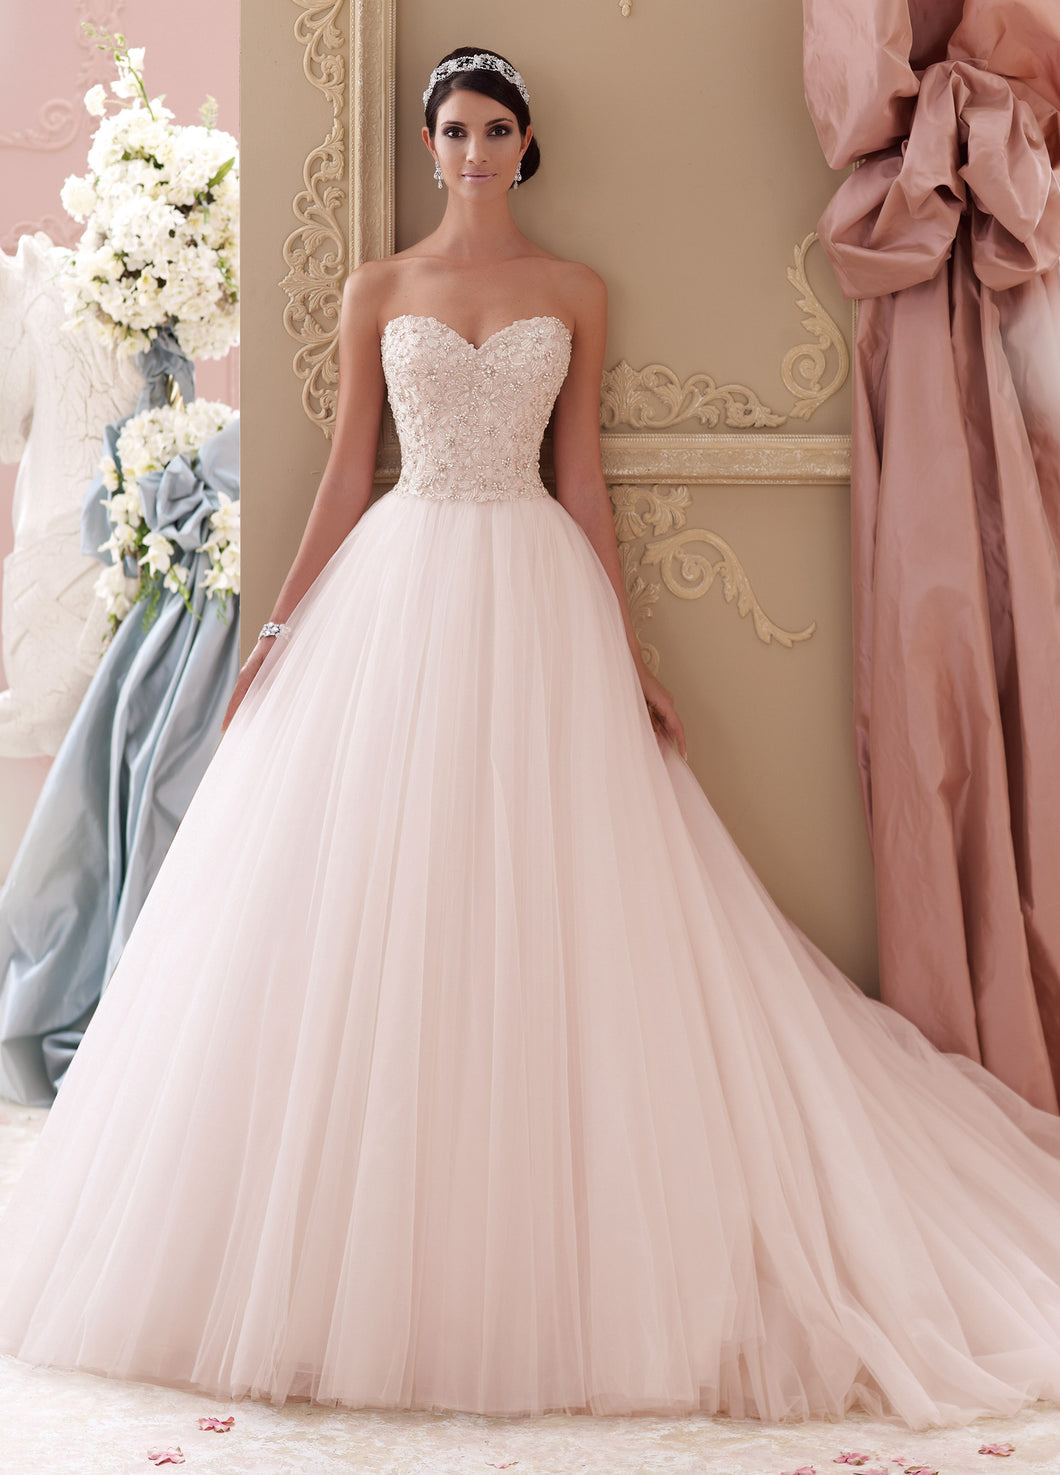 David Tutera 'Luca' size 14 new wedding dress front view on model